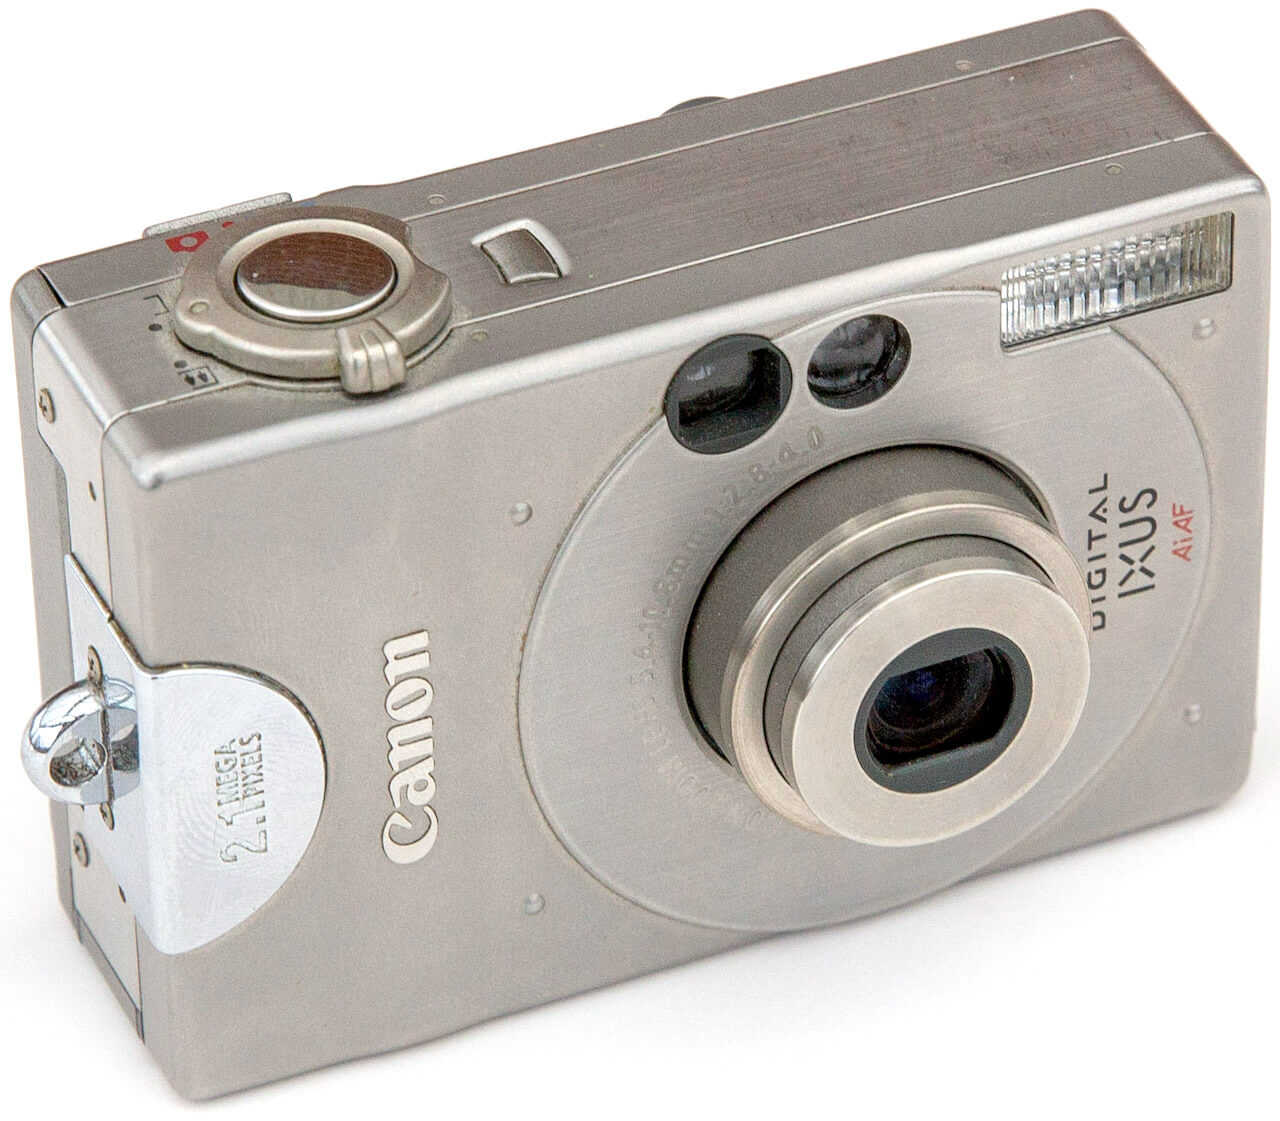 My first digital camera, the Canon Digital Ixus. (65-42)